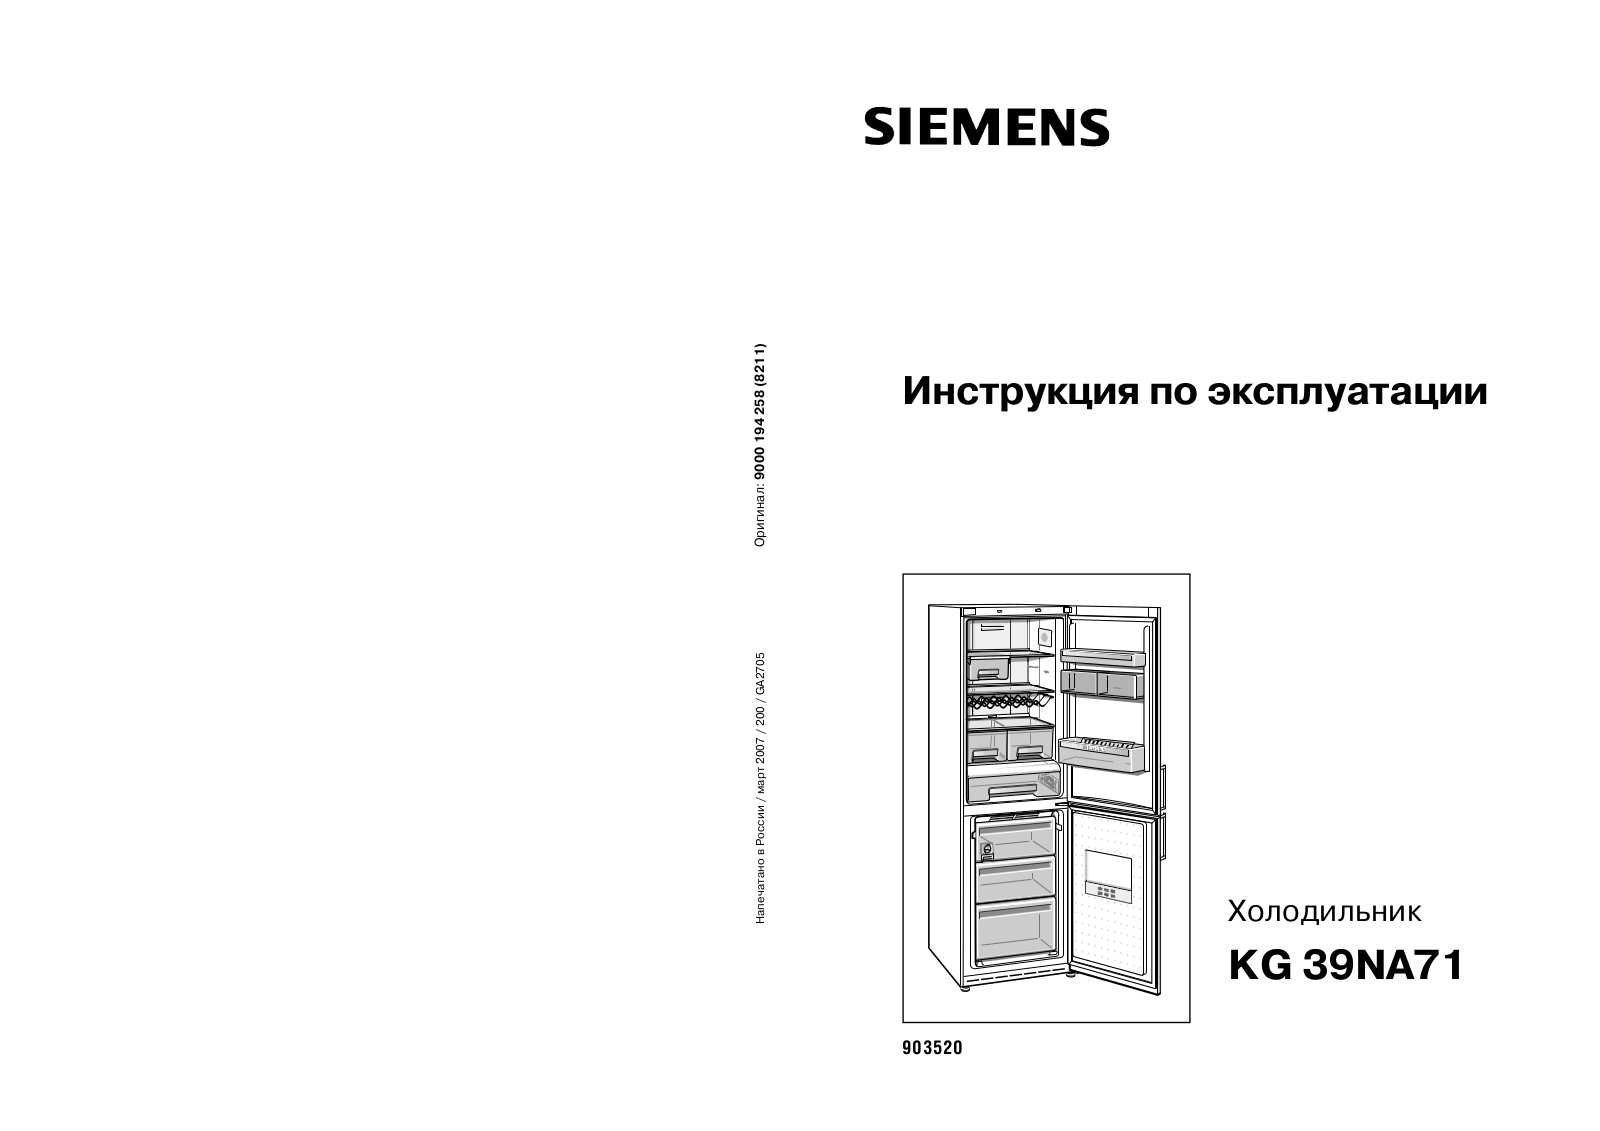 SIEMENS KG 39NA71 User Manual